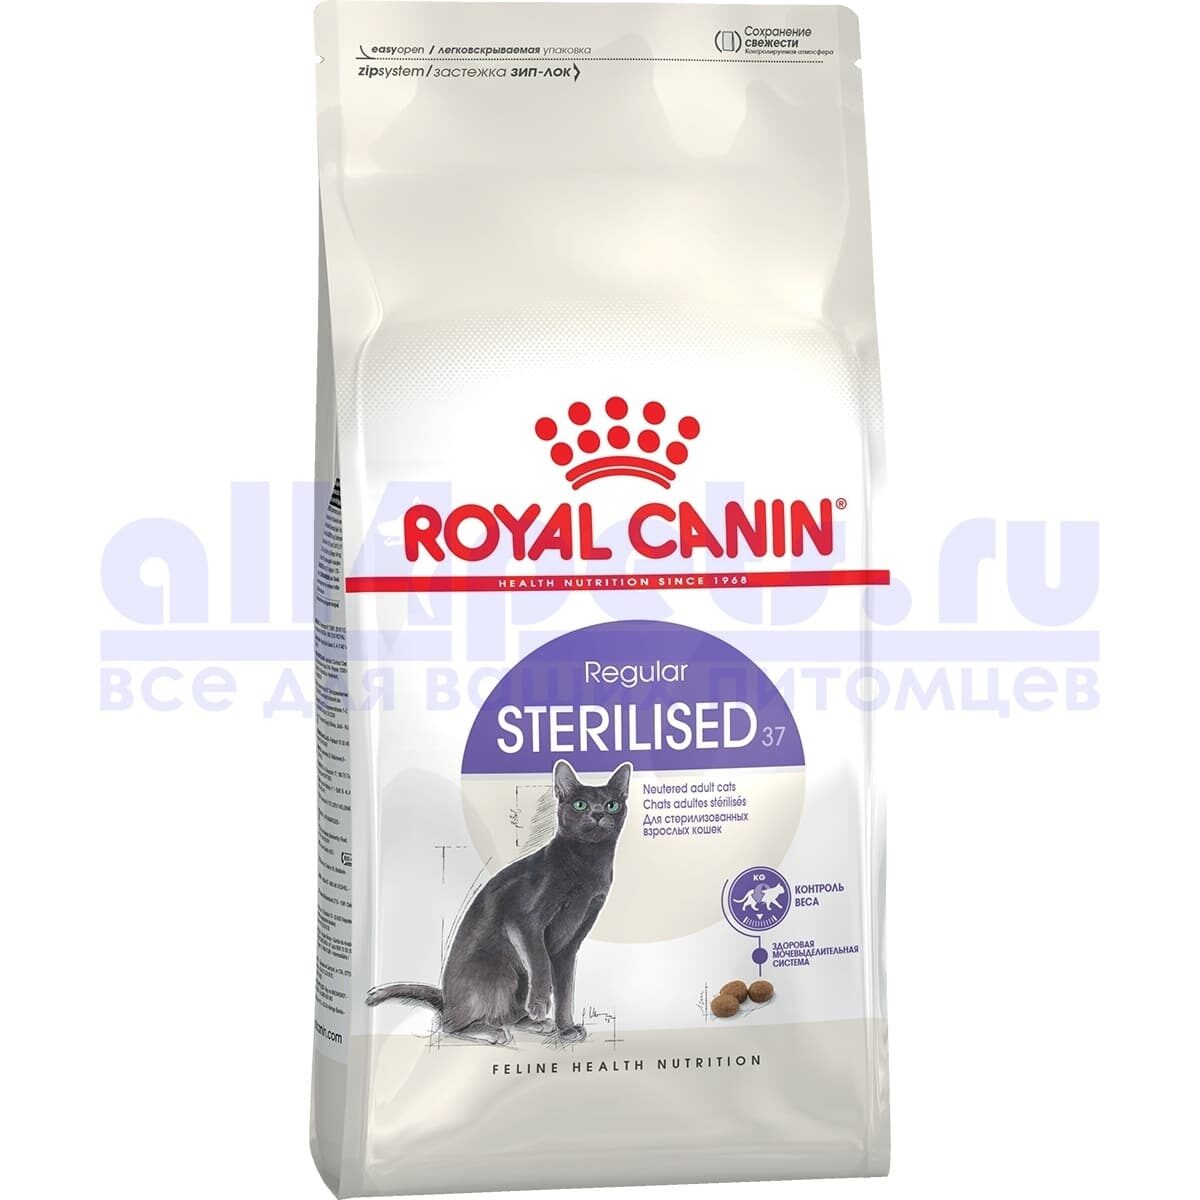 Royal Canin Sterilised 37 (4кг)